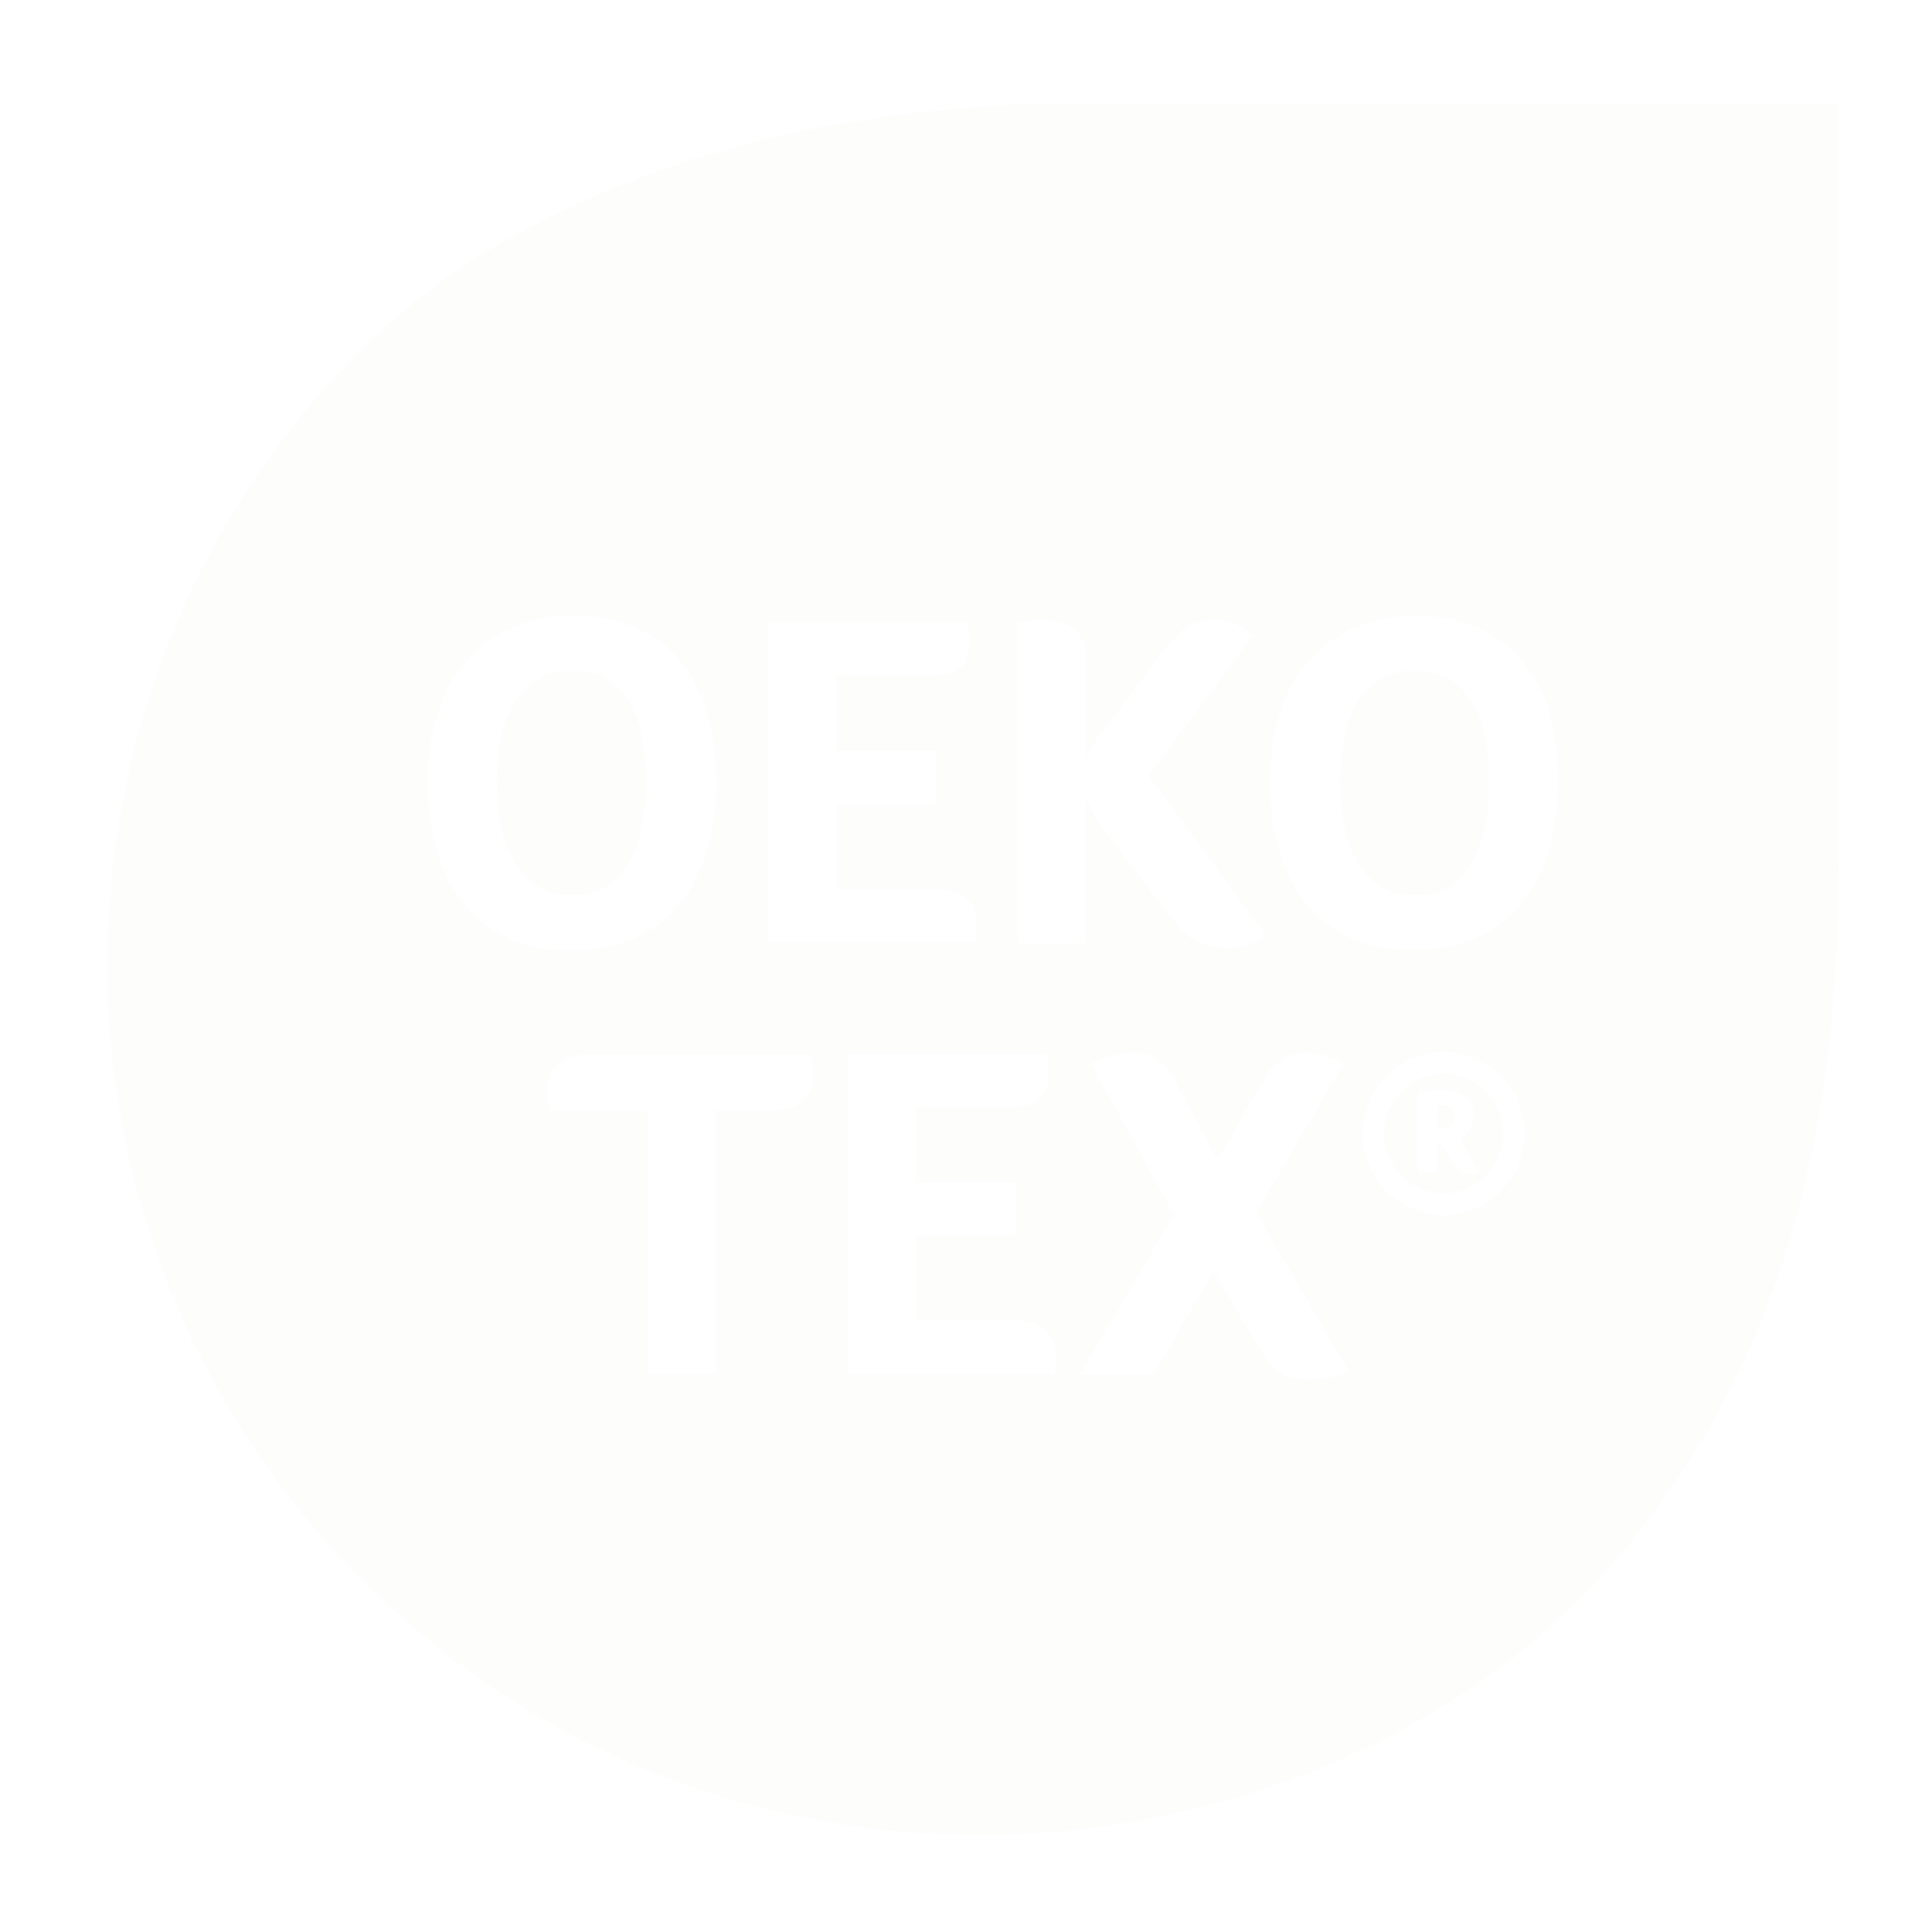 emma & noah - OEKO TEX Standard 100